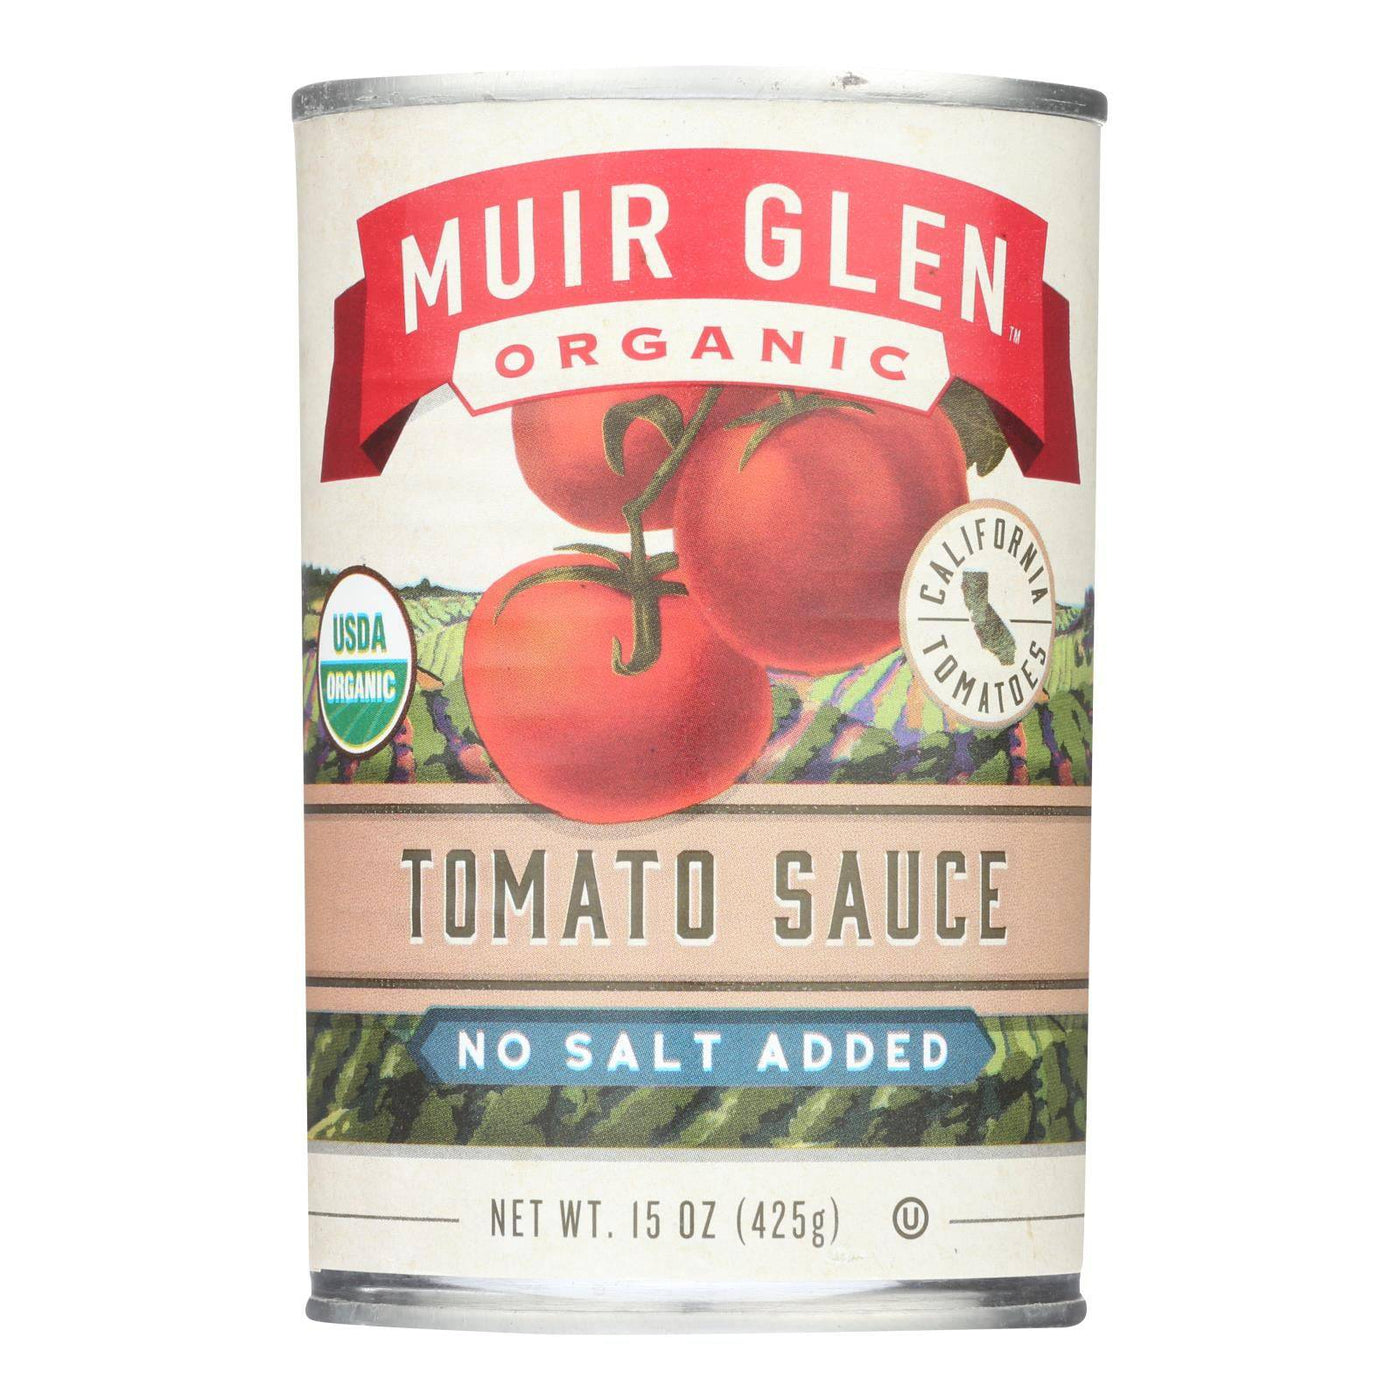 Buy Muir Glen Tomato Sauce No Salt Added - Tomato - Case Of 12 - 15 Fl Oz.  at OnlyNaturals.us